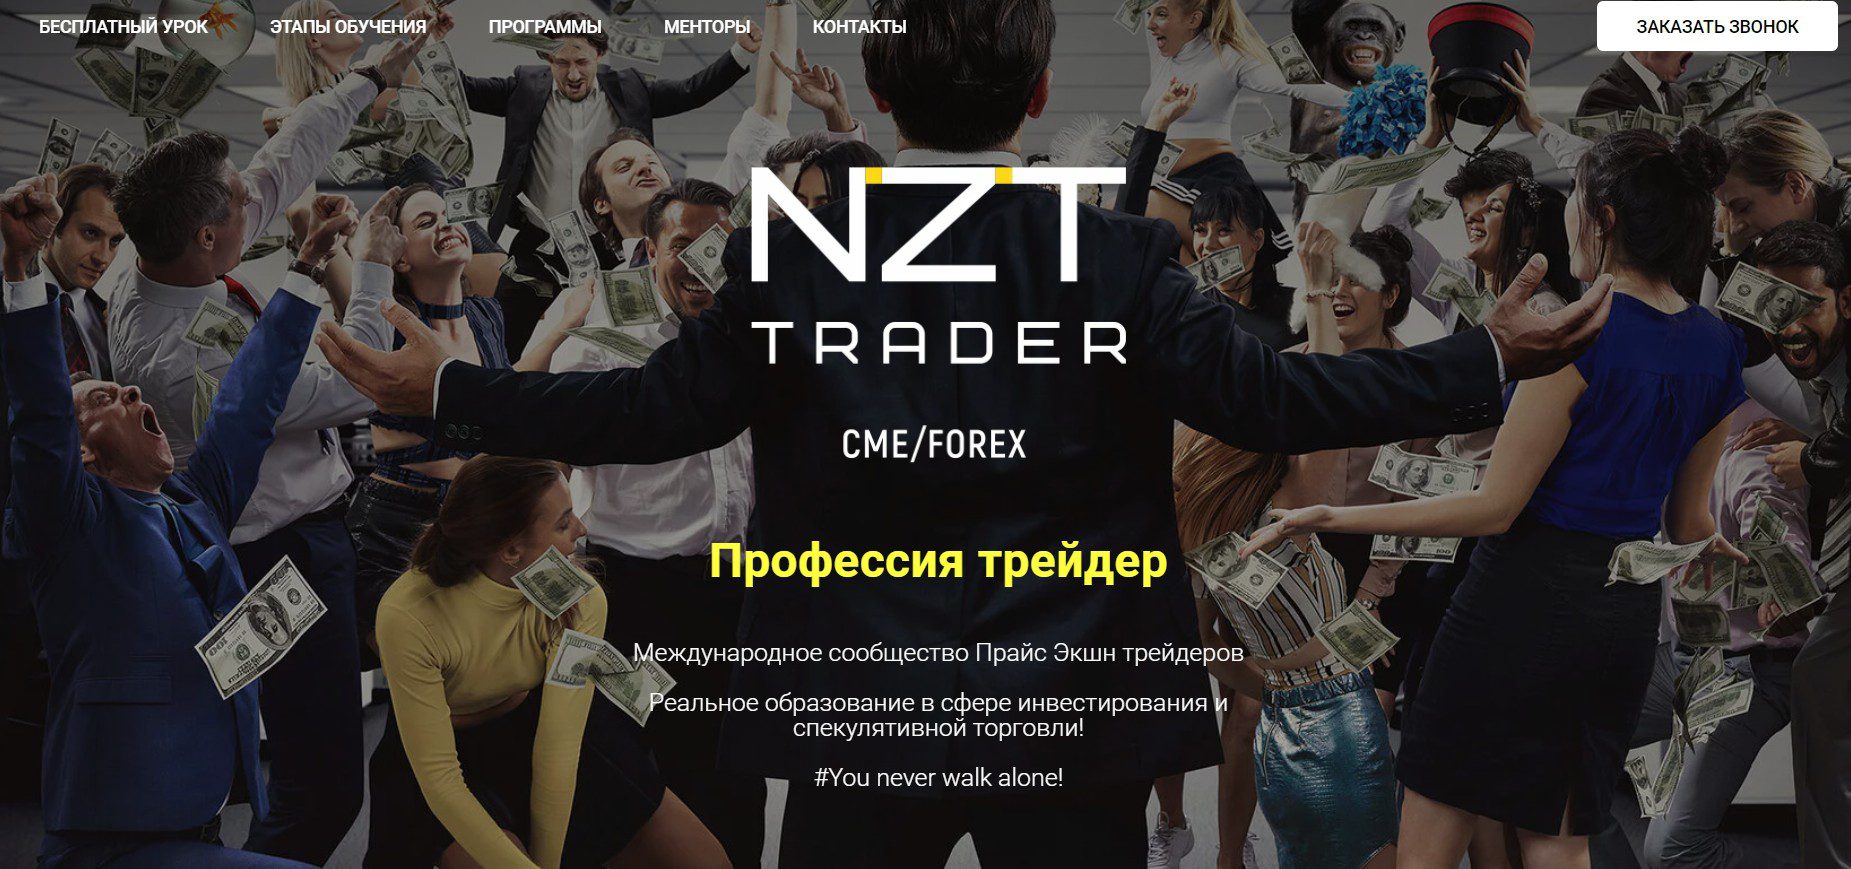 Nzt trader обзор проекта